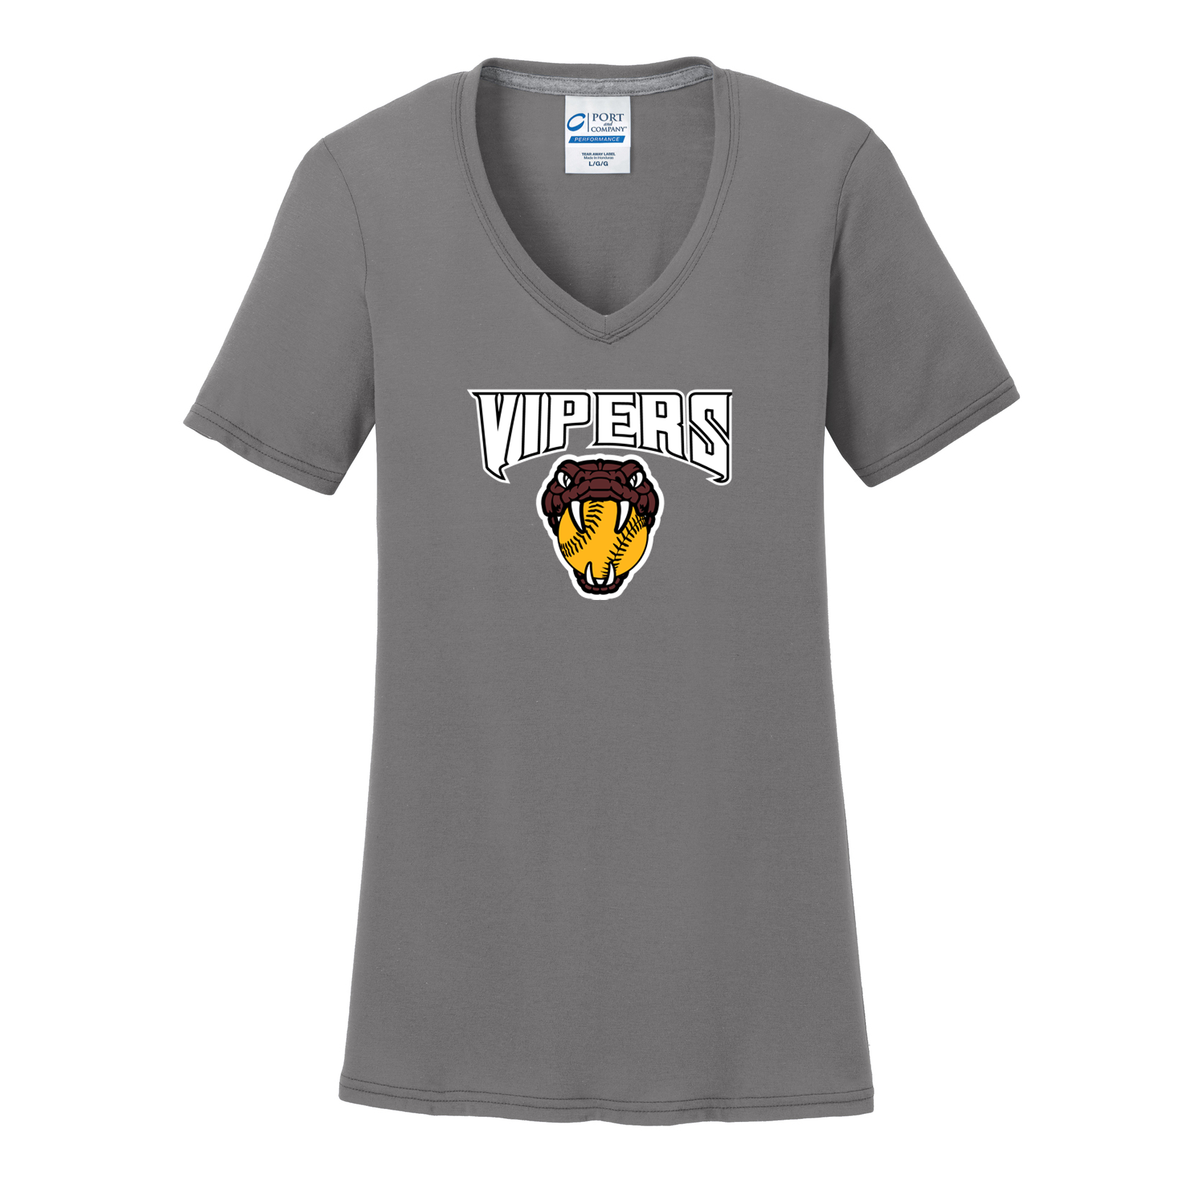 Vipers Softball Women's T-Shirt